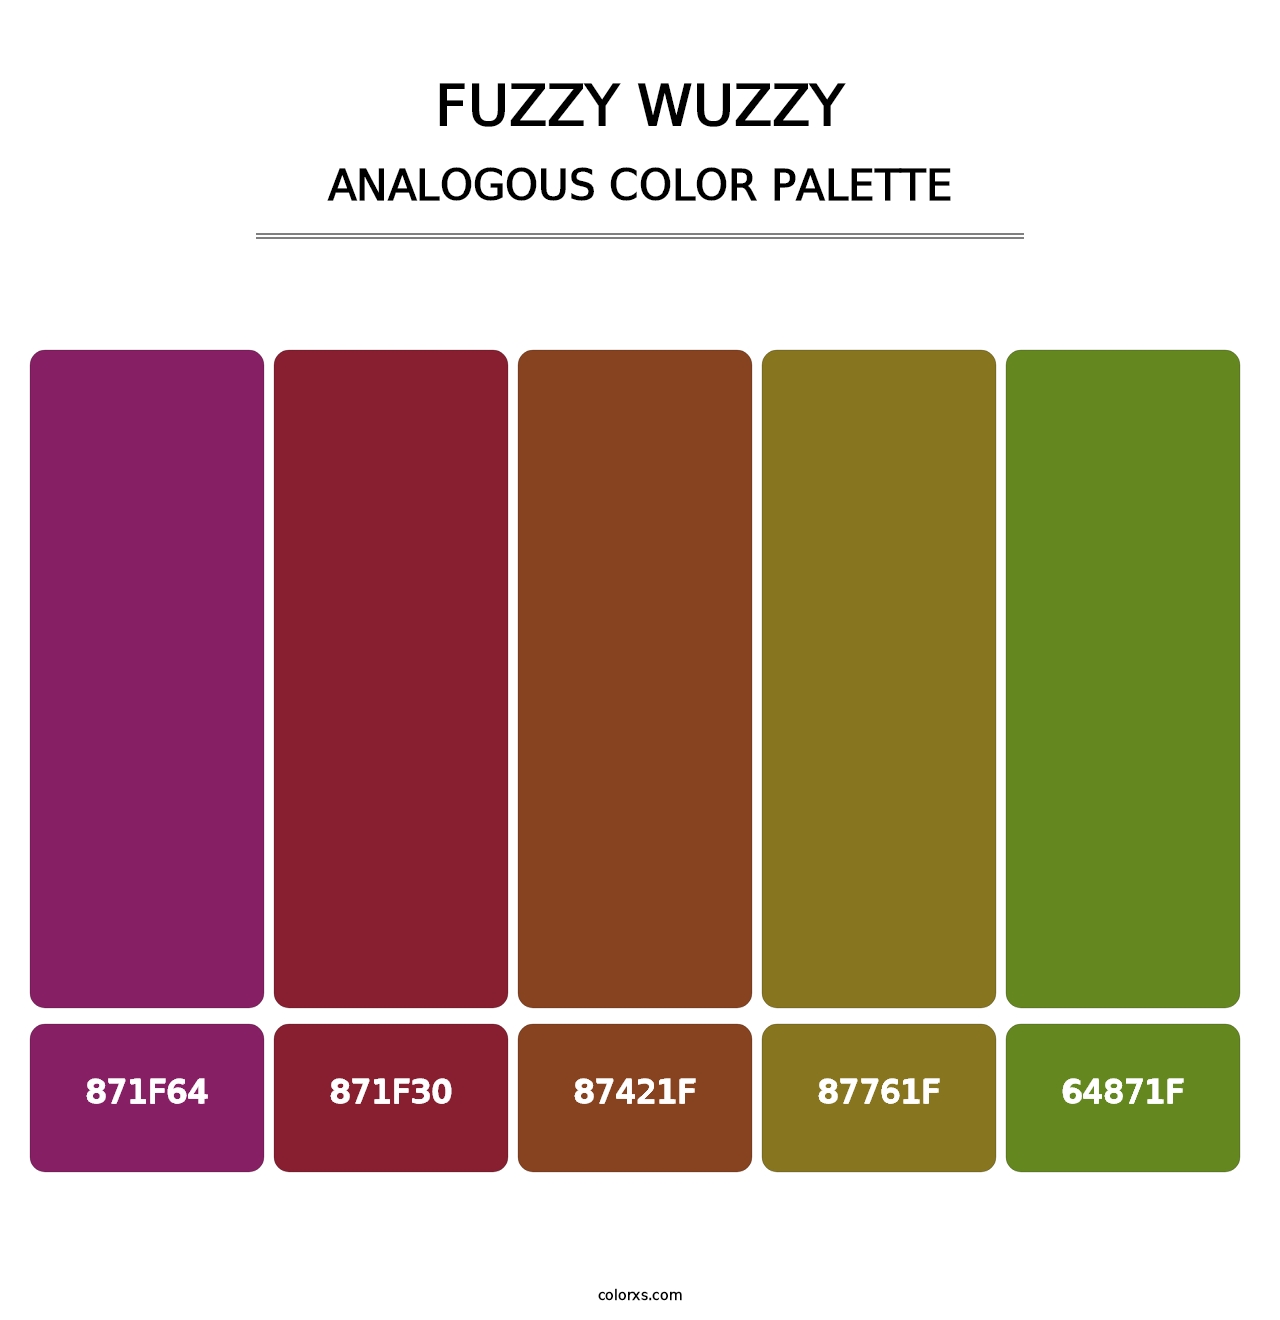 Fuzzy Wuzzy - Analogous Color Palette